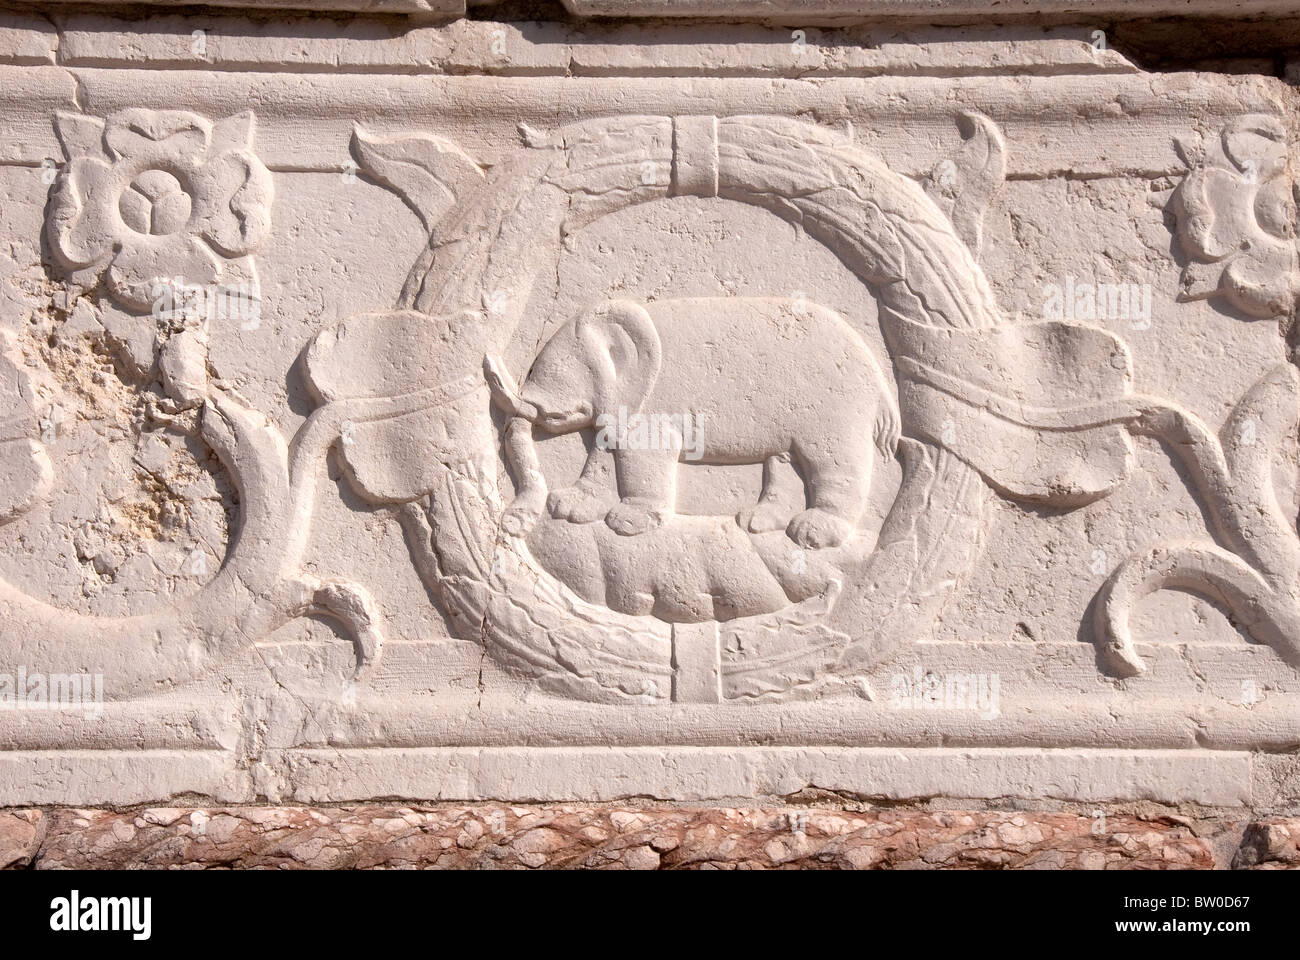 El símbolo de elefante tallada de Sigismondo Malatesta en la fachada del Tempio Malatestiano, iglesia catedral de Rimini, Italia Foto de stock